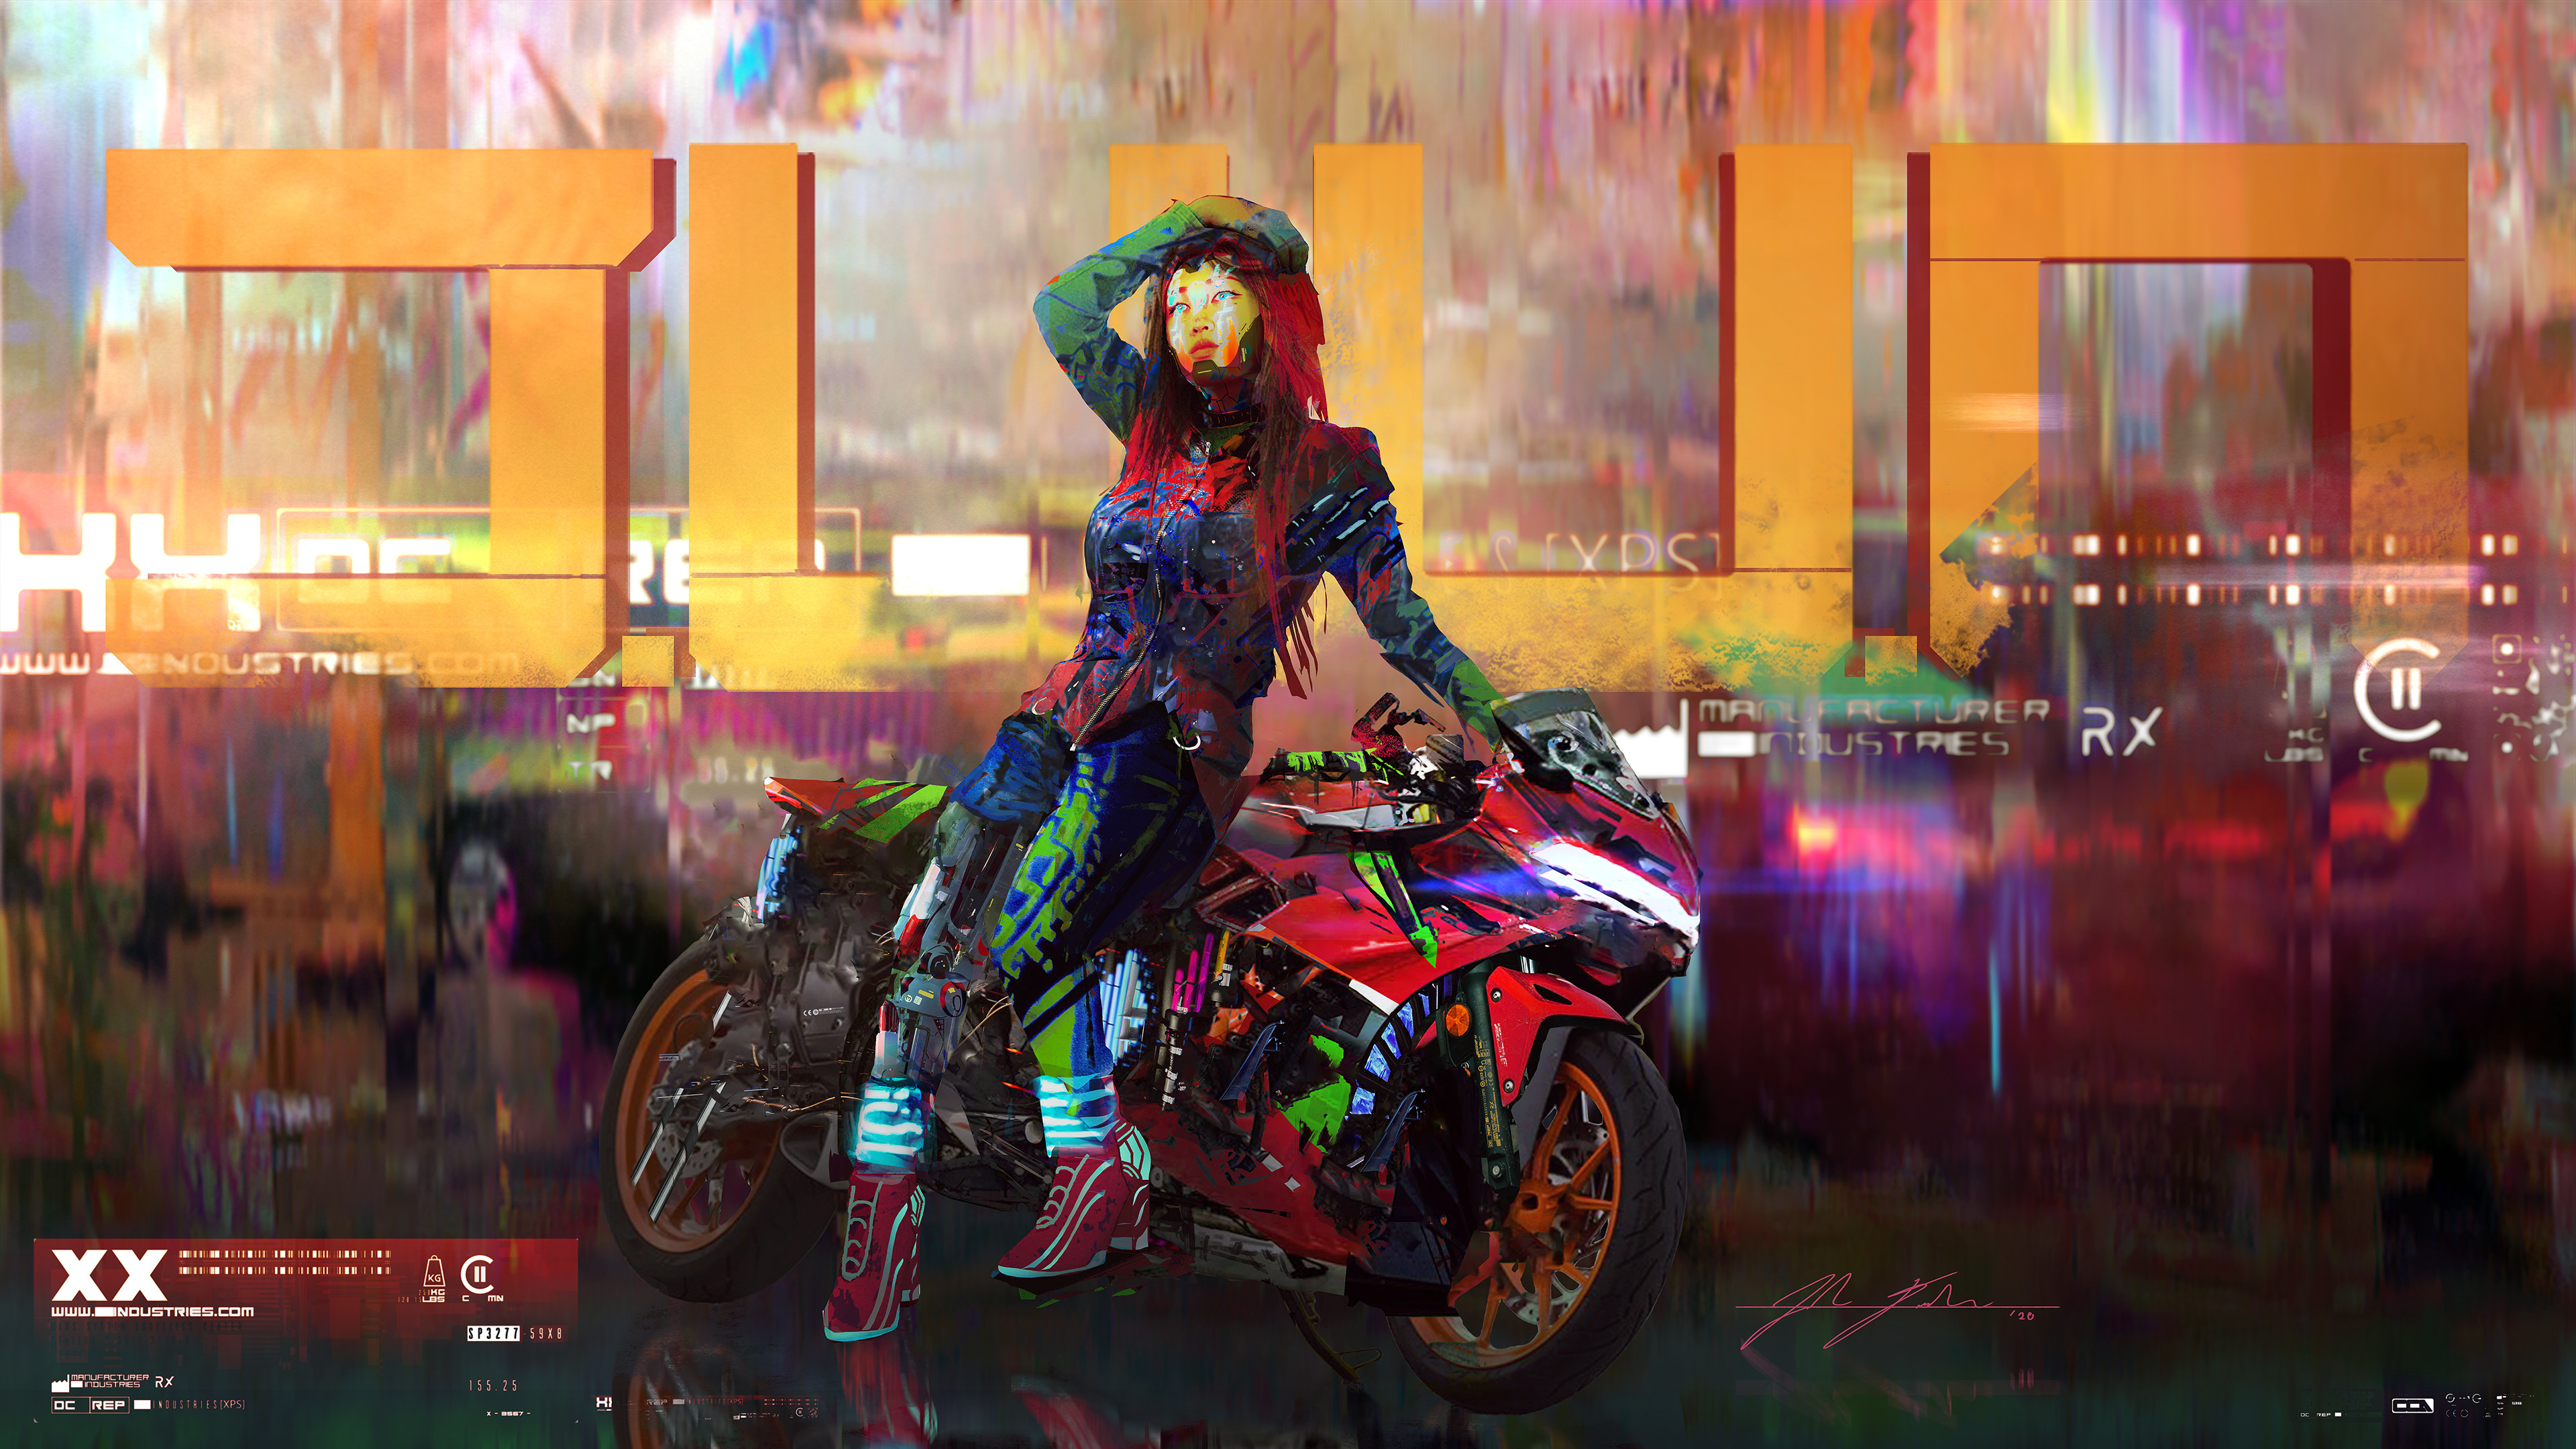 Josh Durham Cyborg Video Games Women Digital Painting Fan Art Young Woman Motorcycle Digital Art Han 3840x2160